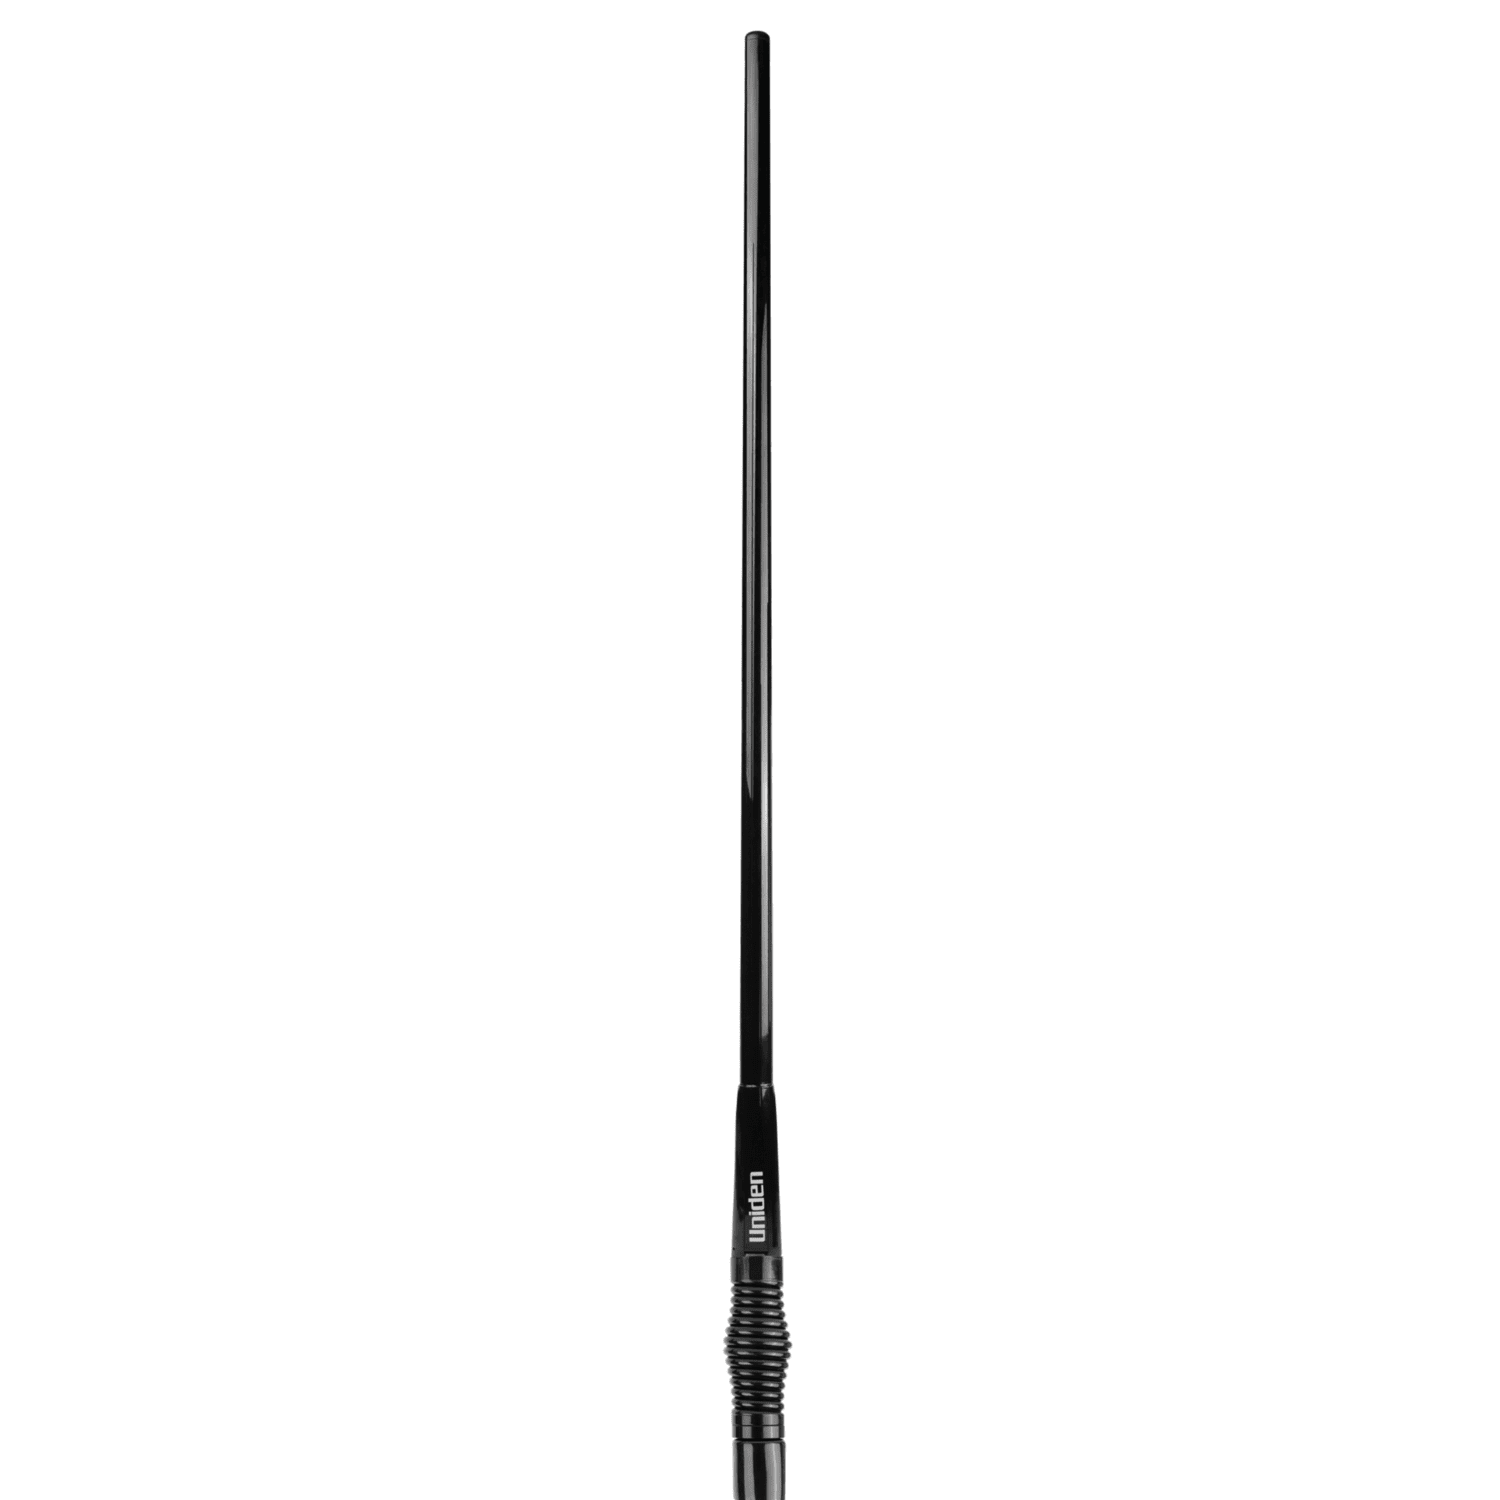 antenna black 6.6 dbi 1200mm